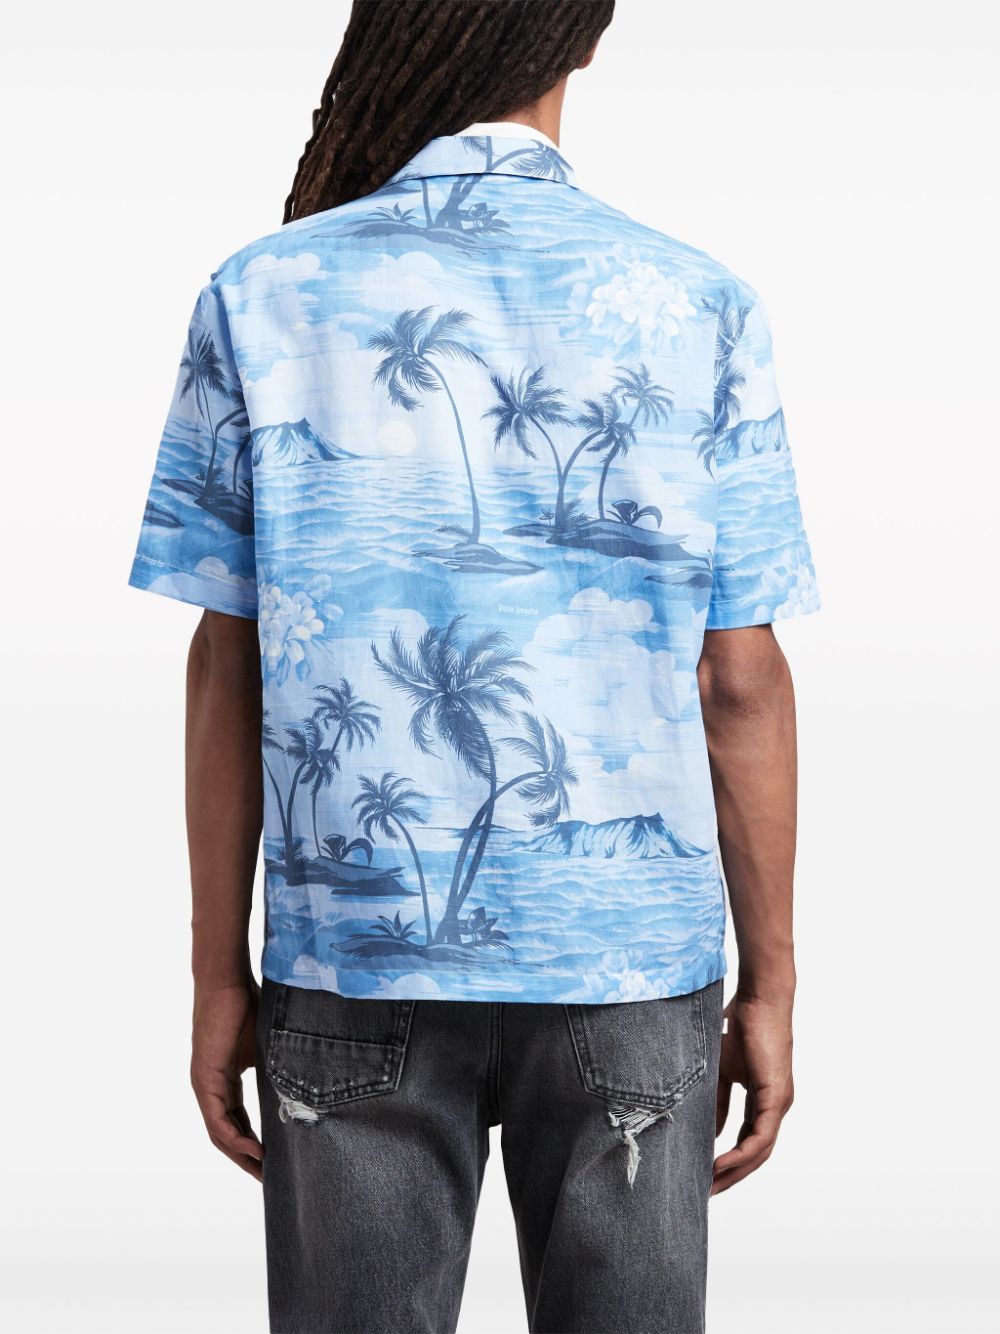 Blue/white cotton-linen blend all-over graphic print shirt